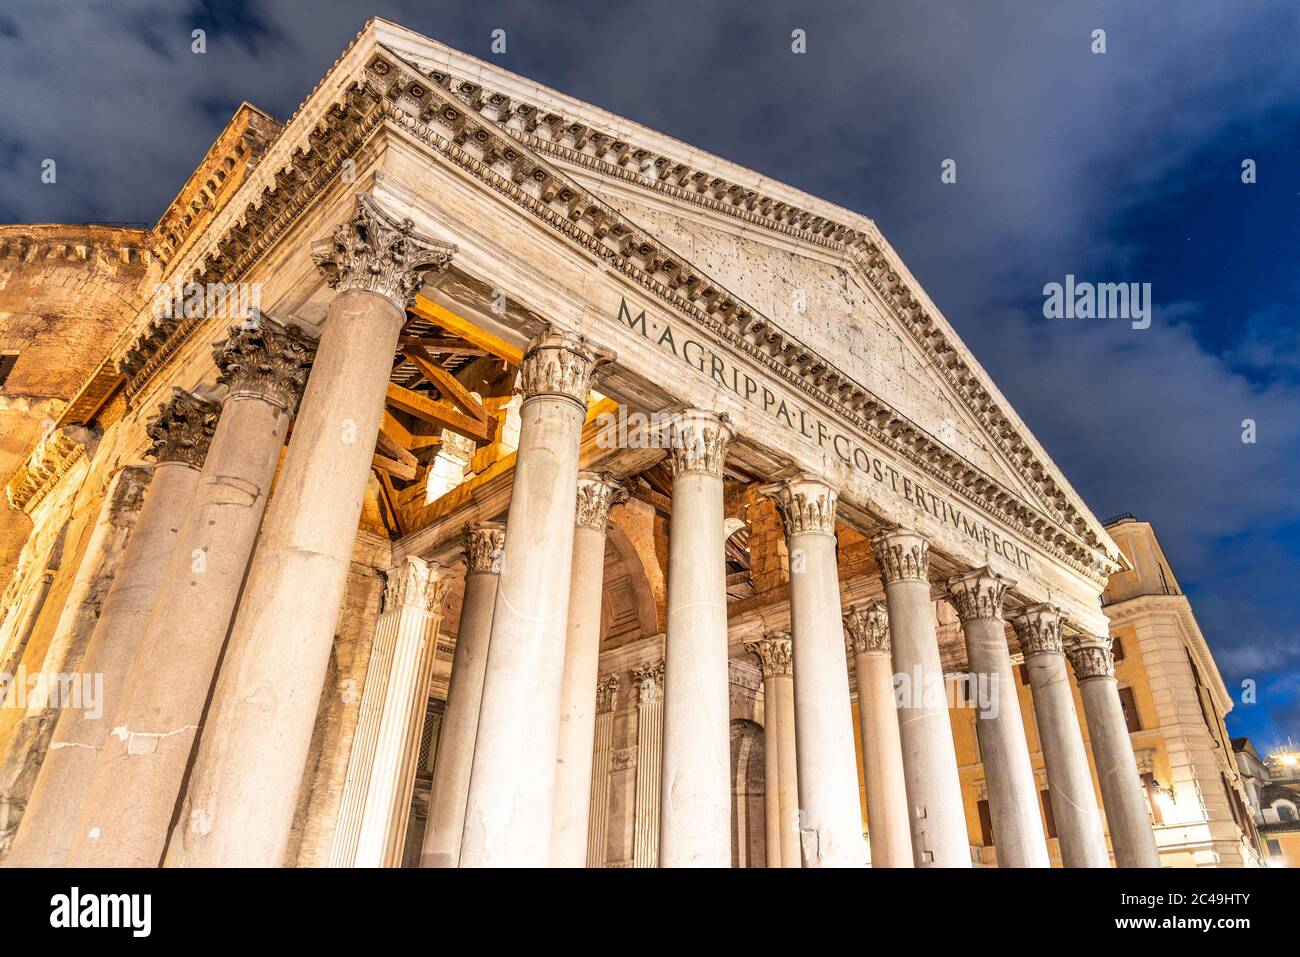 Pantheon - former Roman temple. Piazza della Rotonda by night, Rome, Italy. Stock Photo